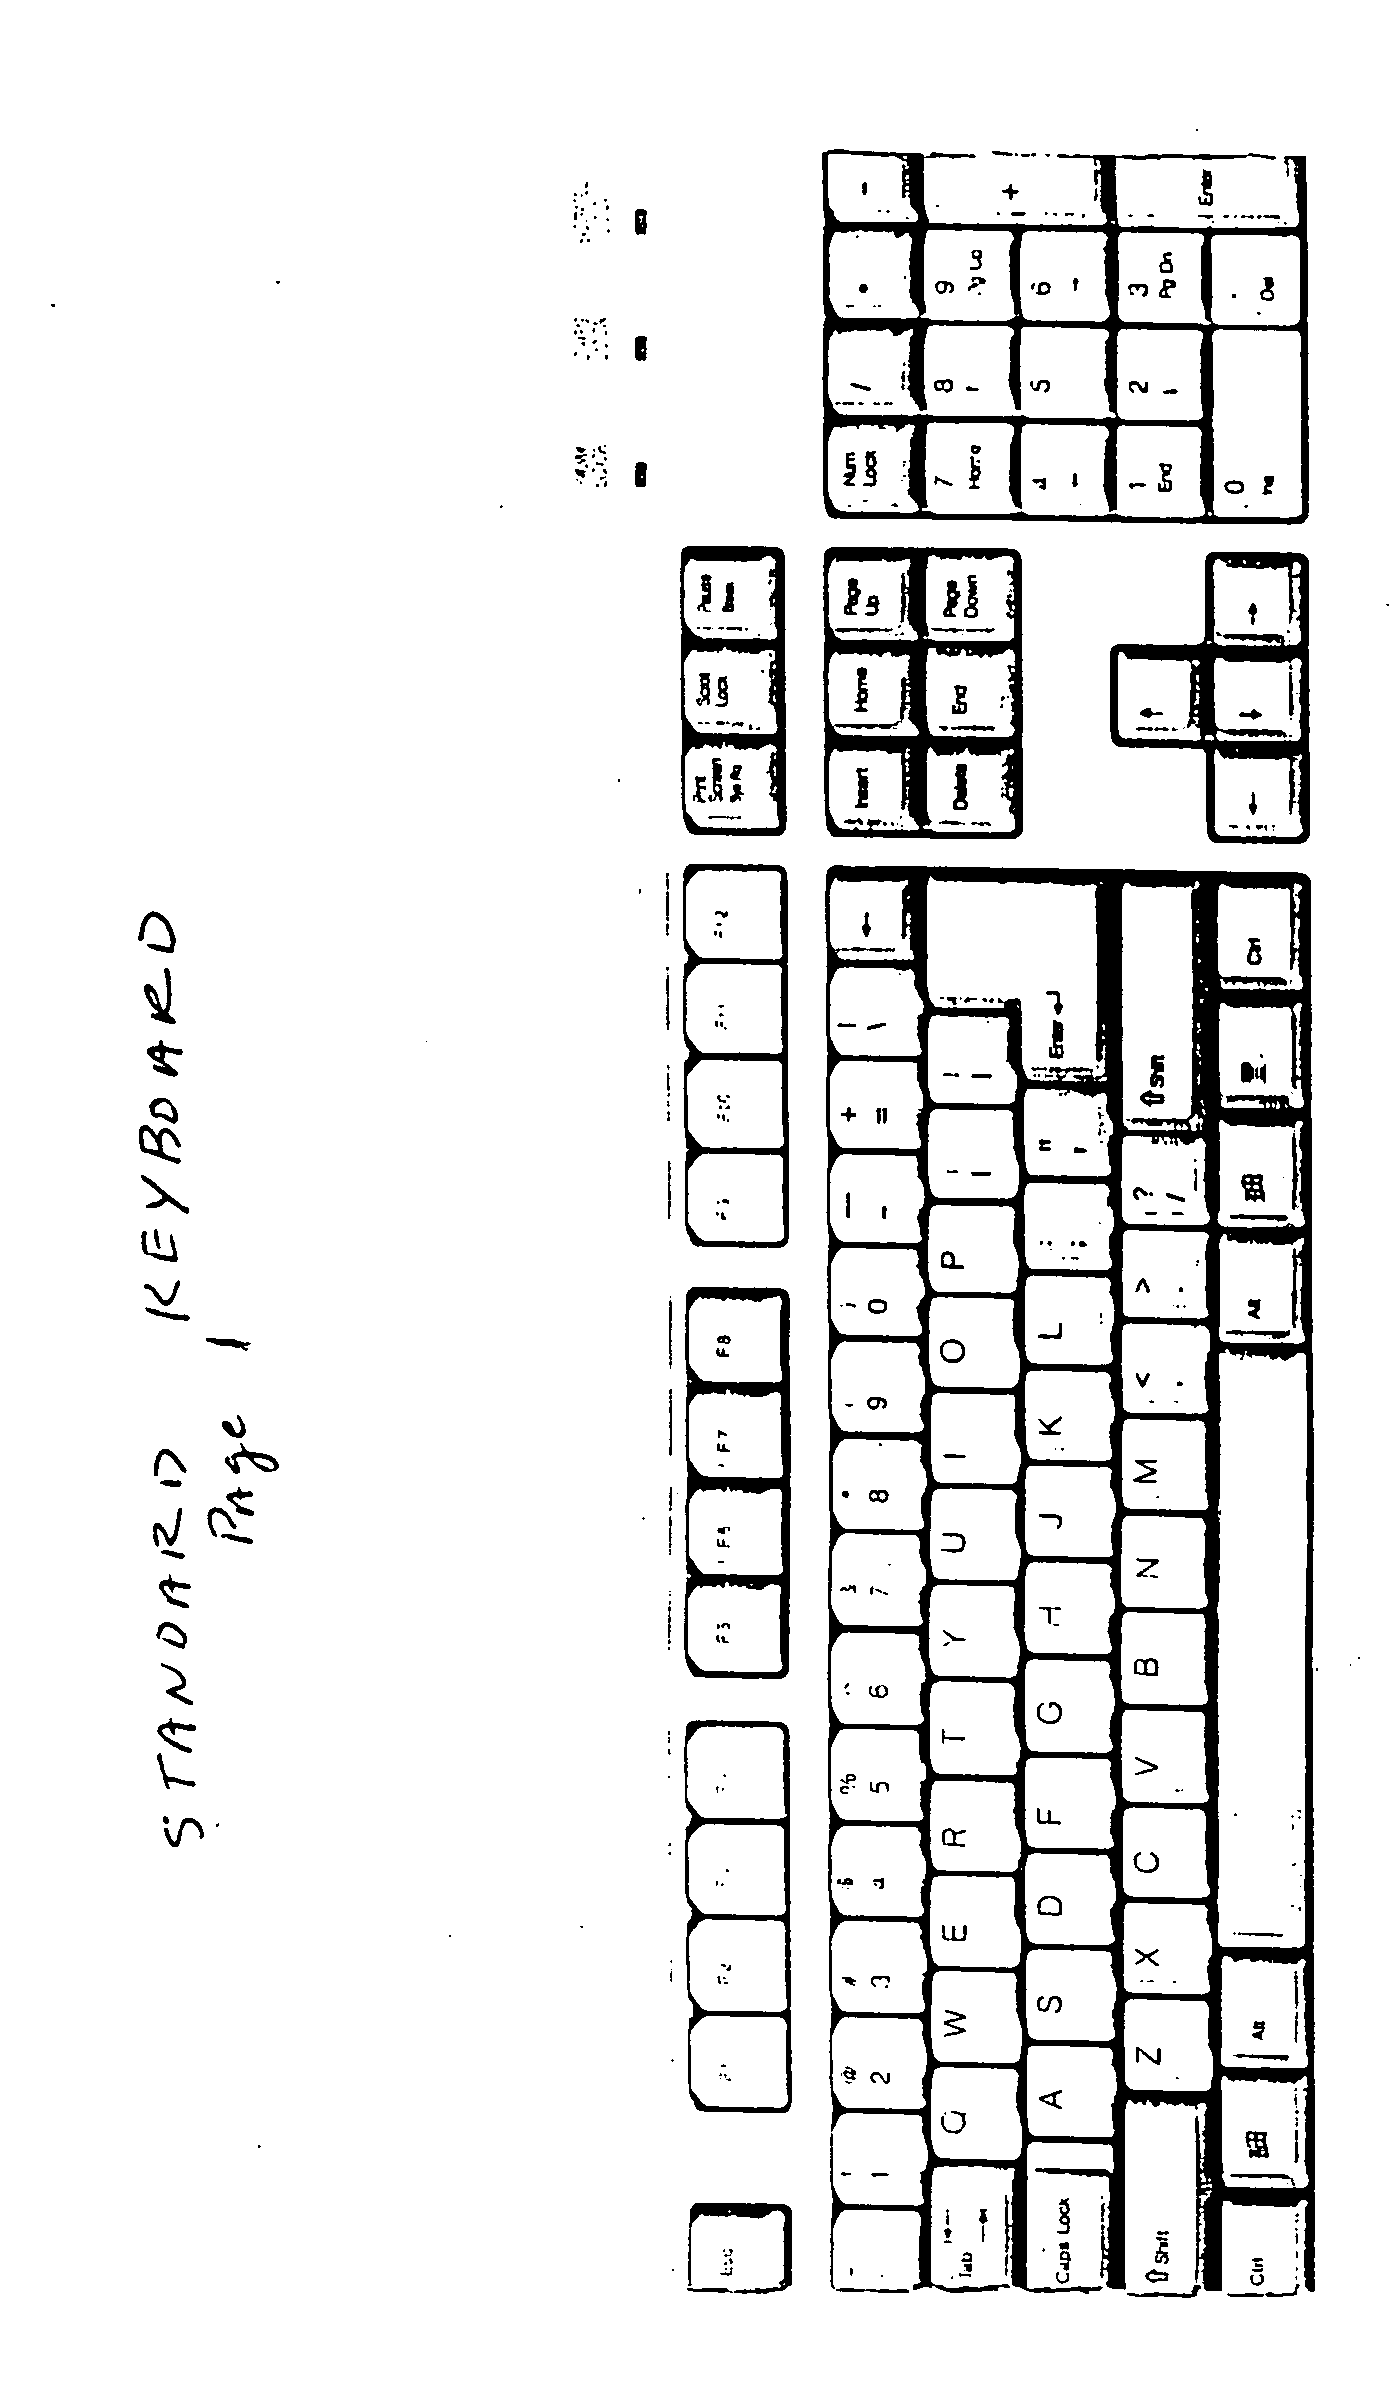 Dual numerical keyboard based on dominance